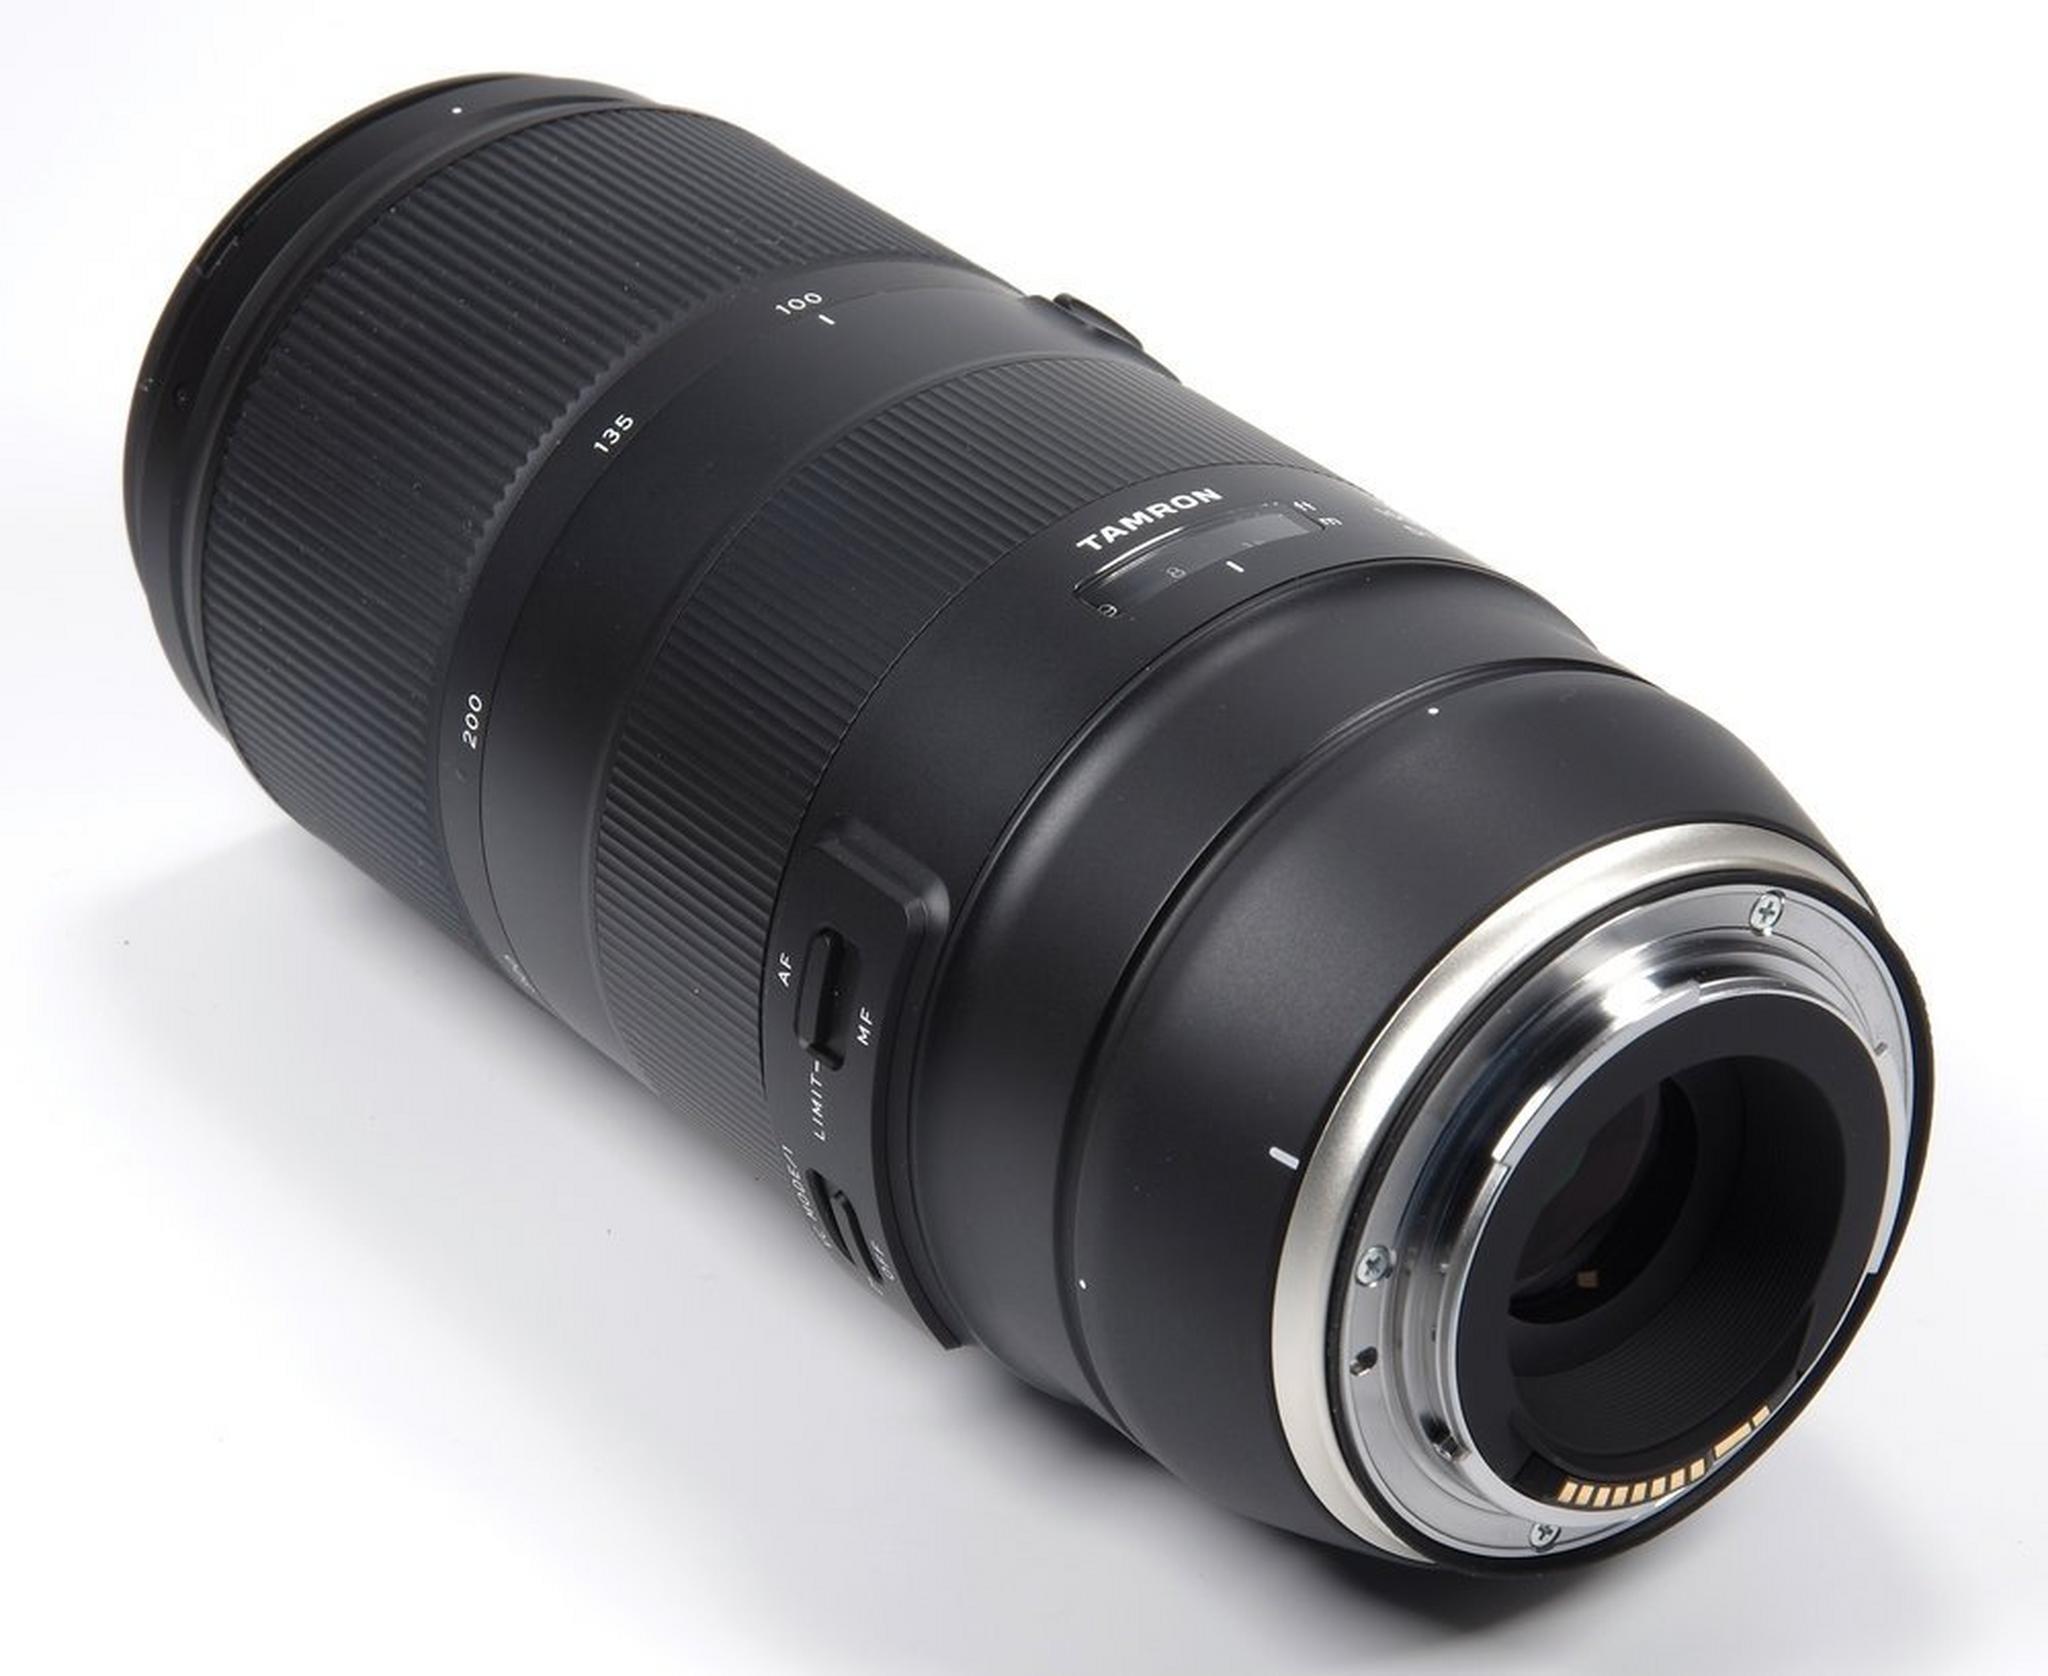 Tamron 100-400mm VC Lens for Nikon - A035N